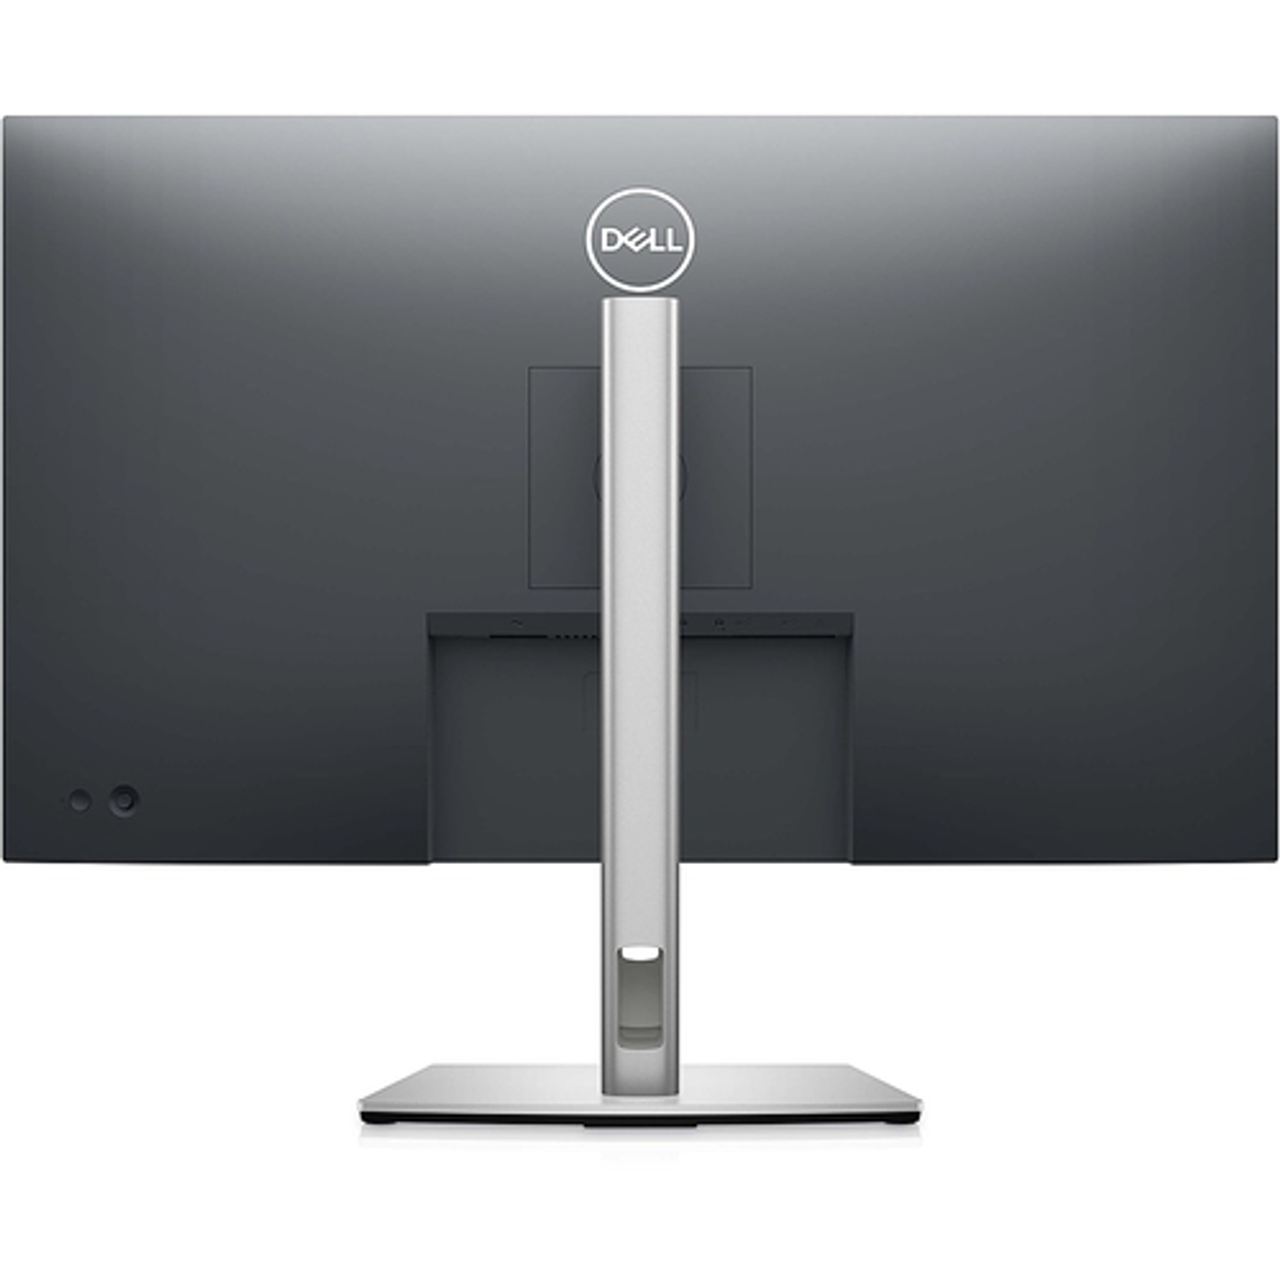 Dell - 31.5" IPS LCD 4K UHD 60Hz Monitor (USB, HDMI) - Black, Silver